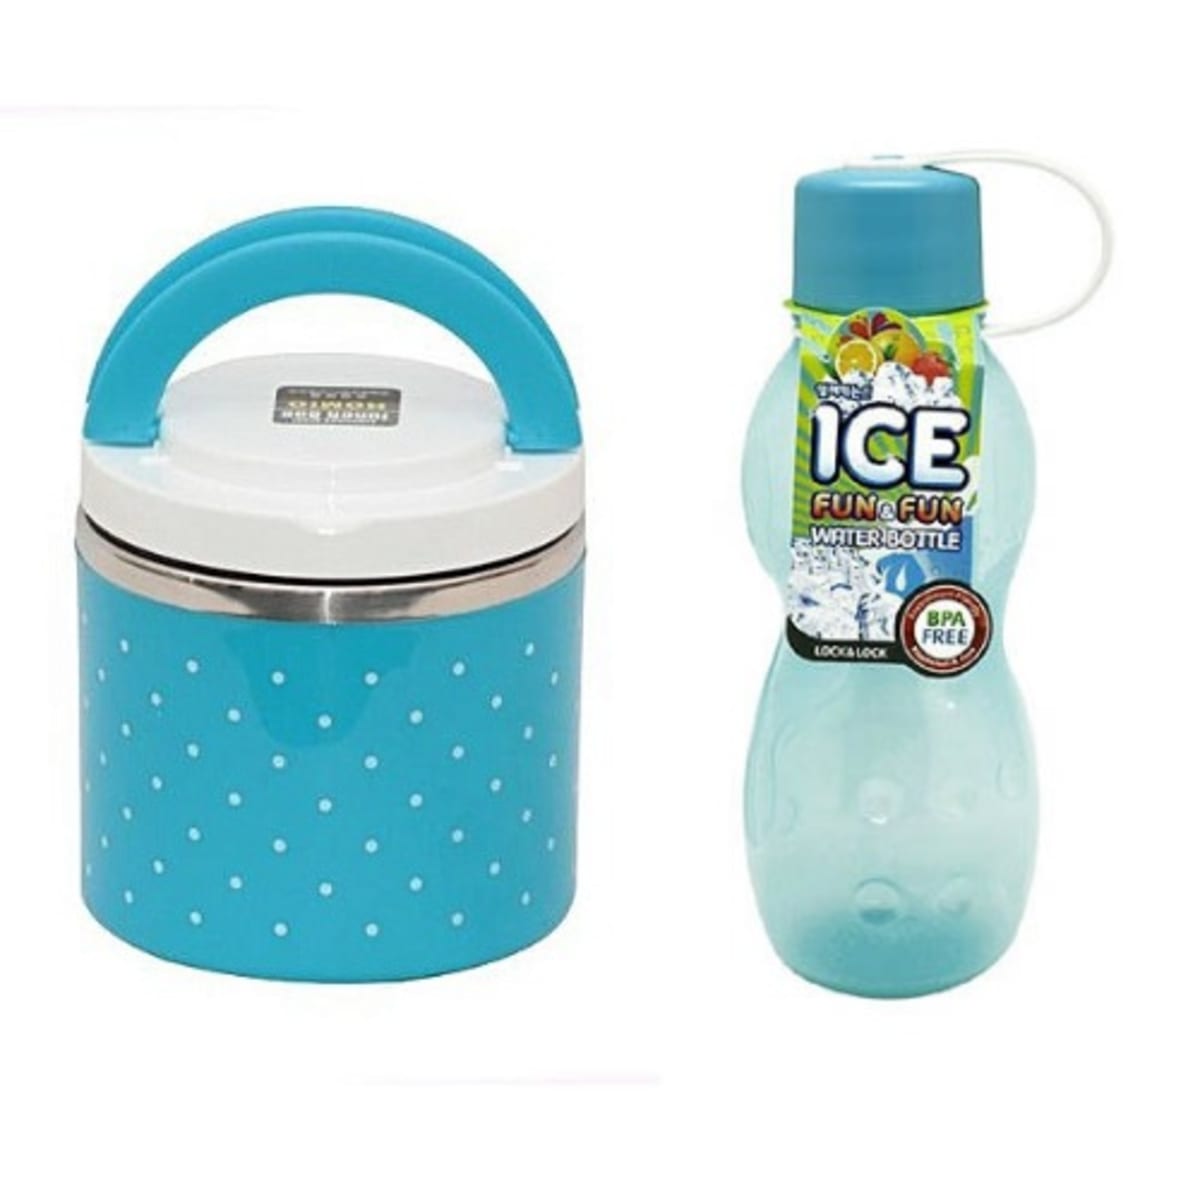 Homio Single Layer Food Flask(630ml) And Ice Fun Water Bottle - Blue